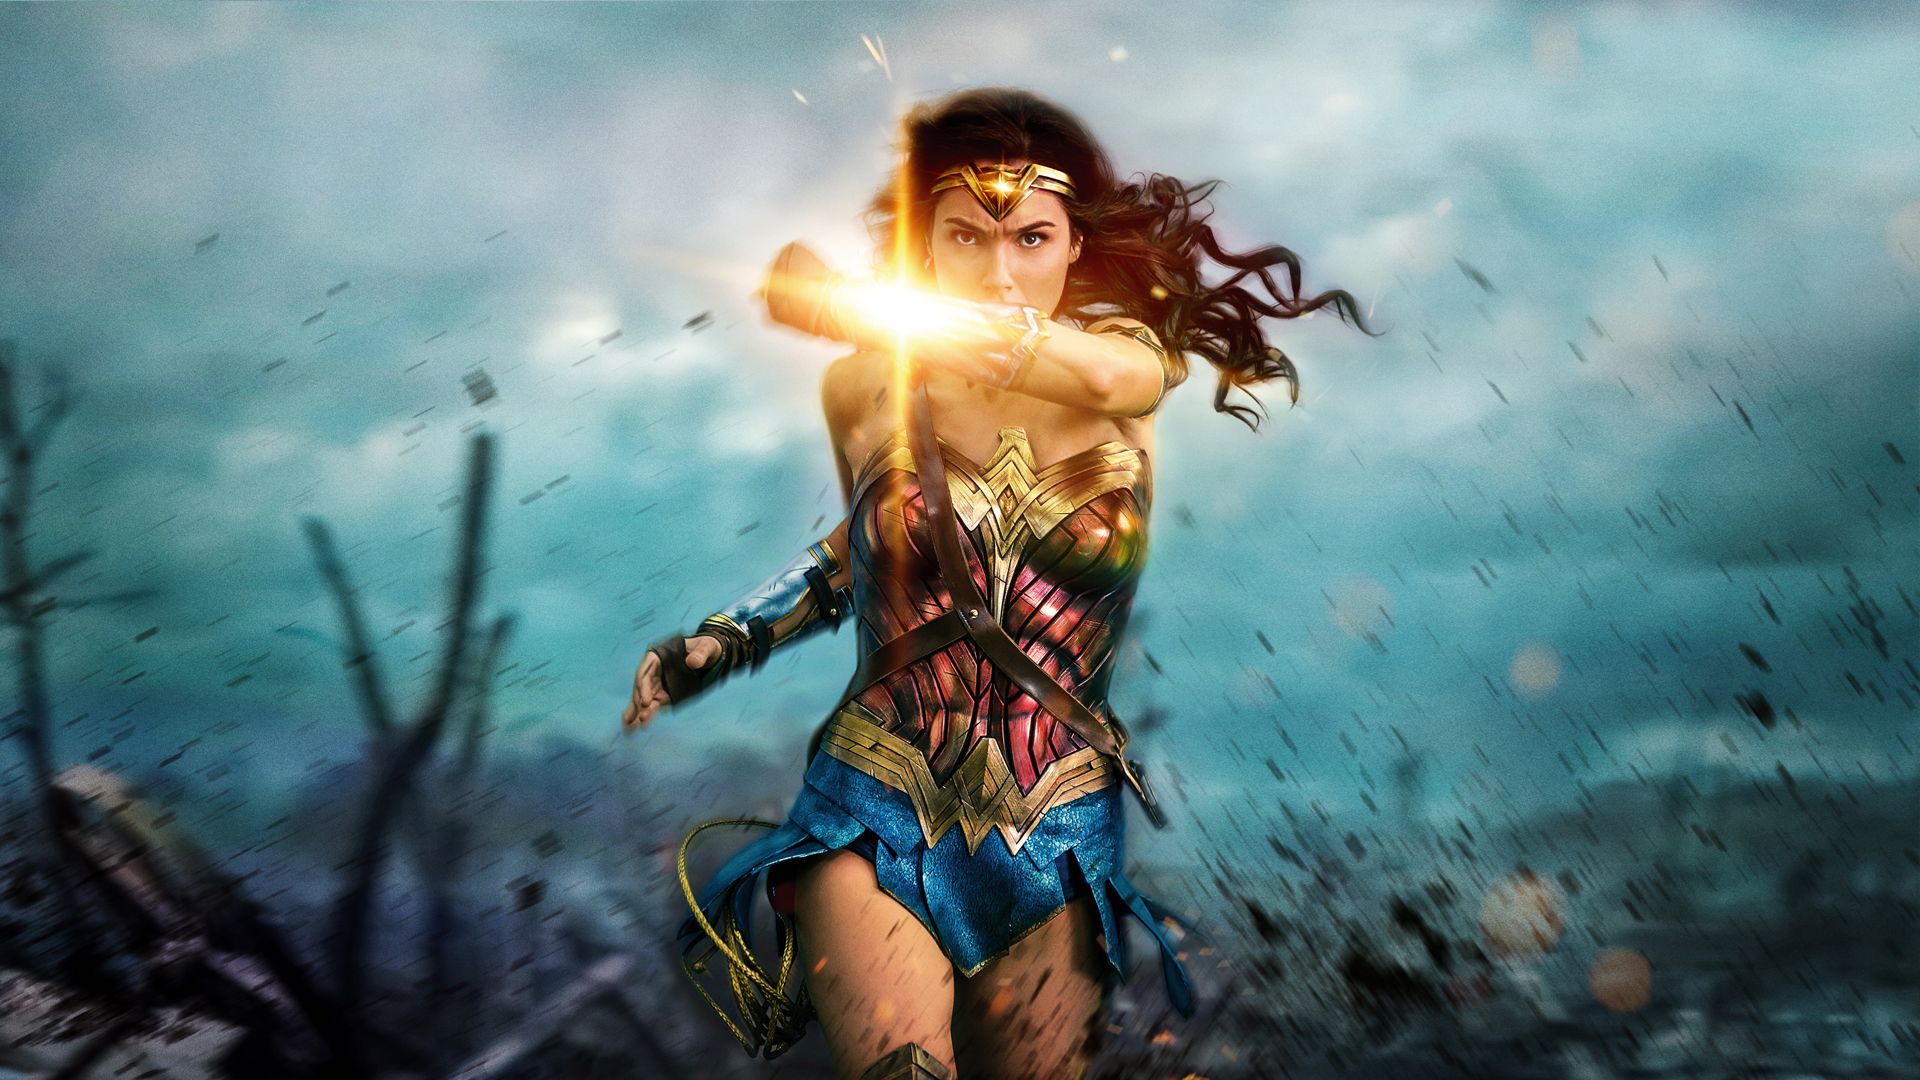 Wallpaper Wonder Woman. Superman Wonder